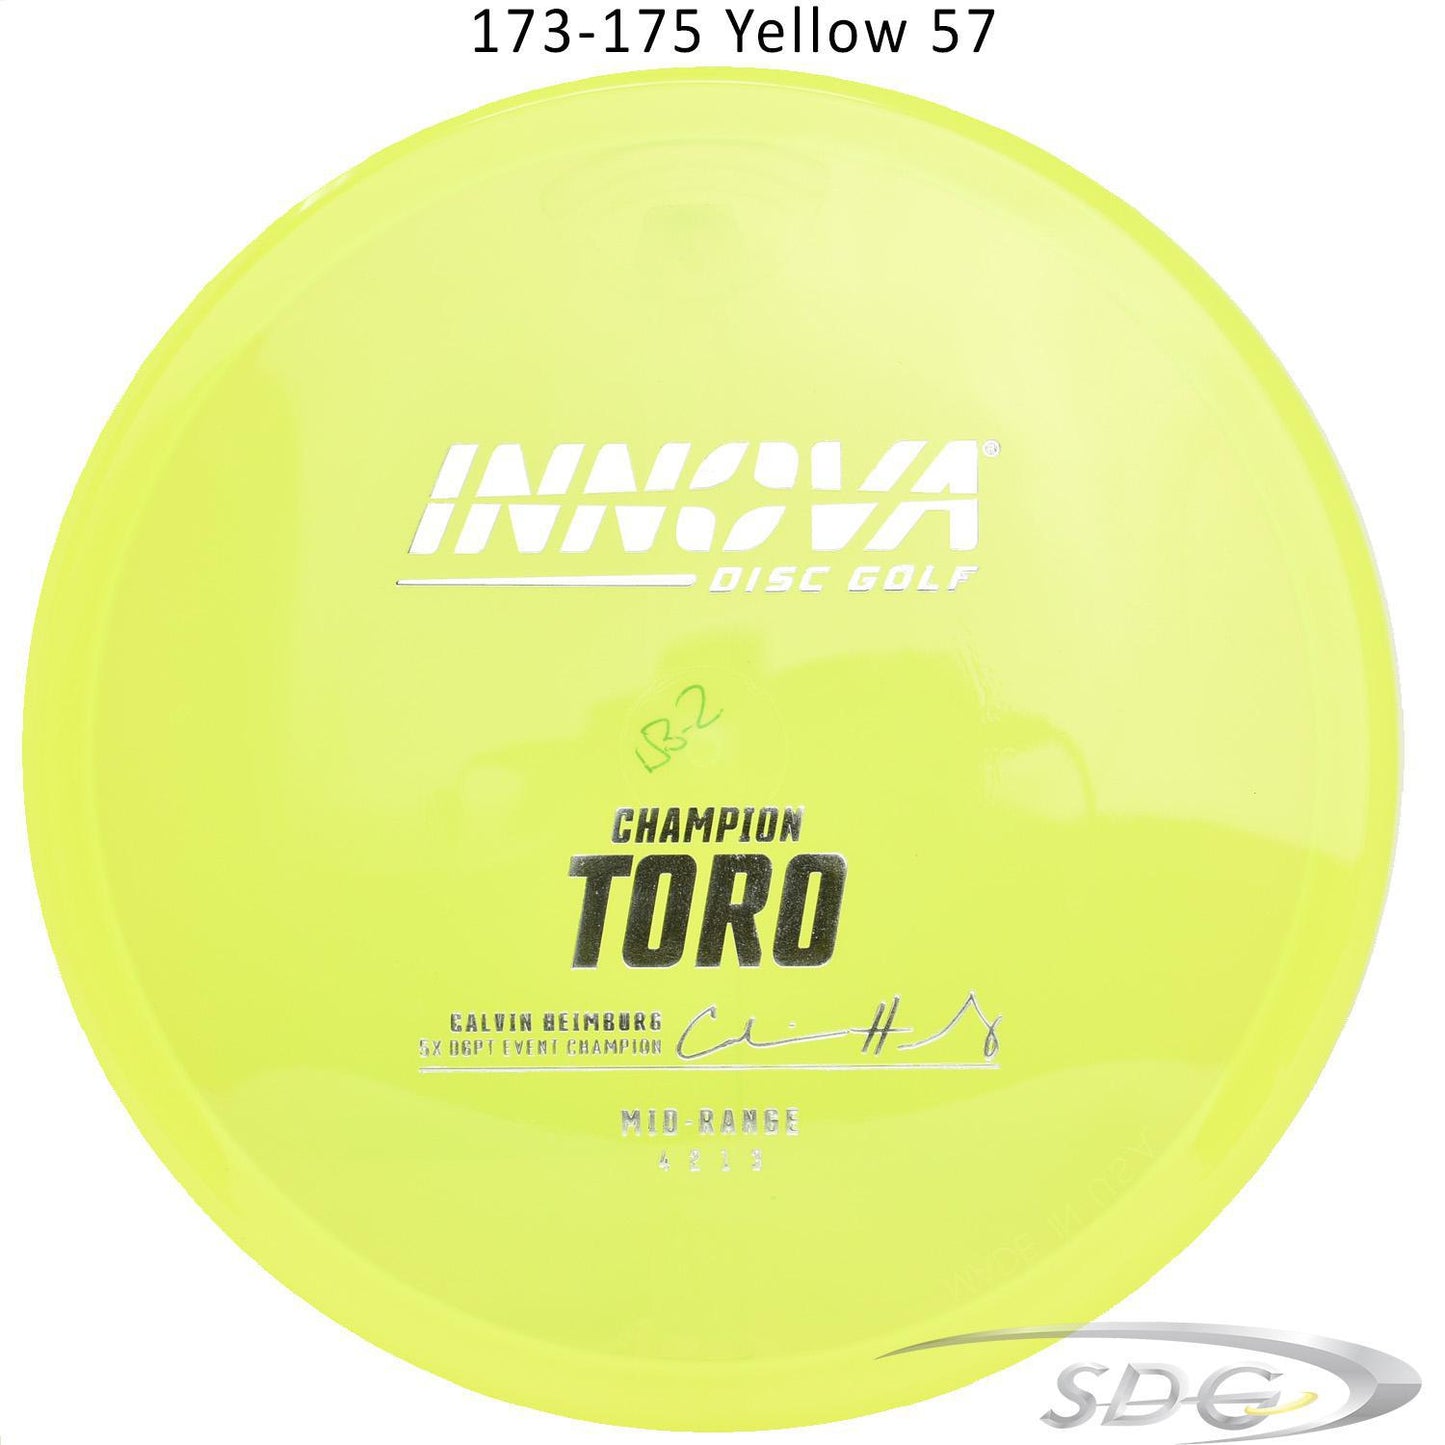 innova-champion-toro-calvin-heimburg-signature-disc-golf-mid-range 173-175 Yellow 57 